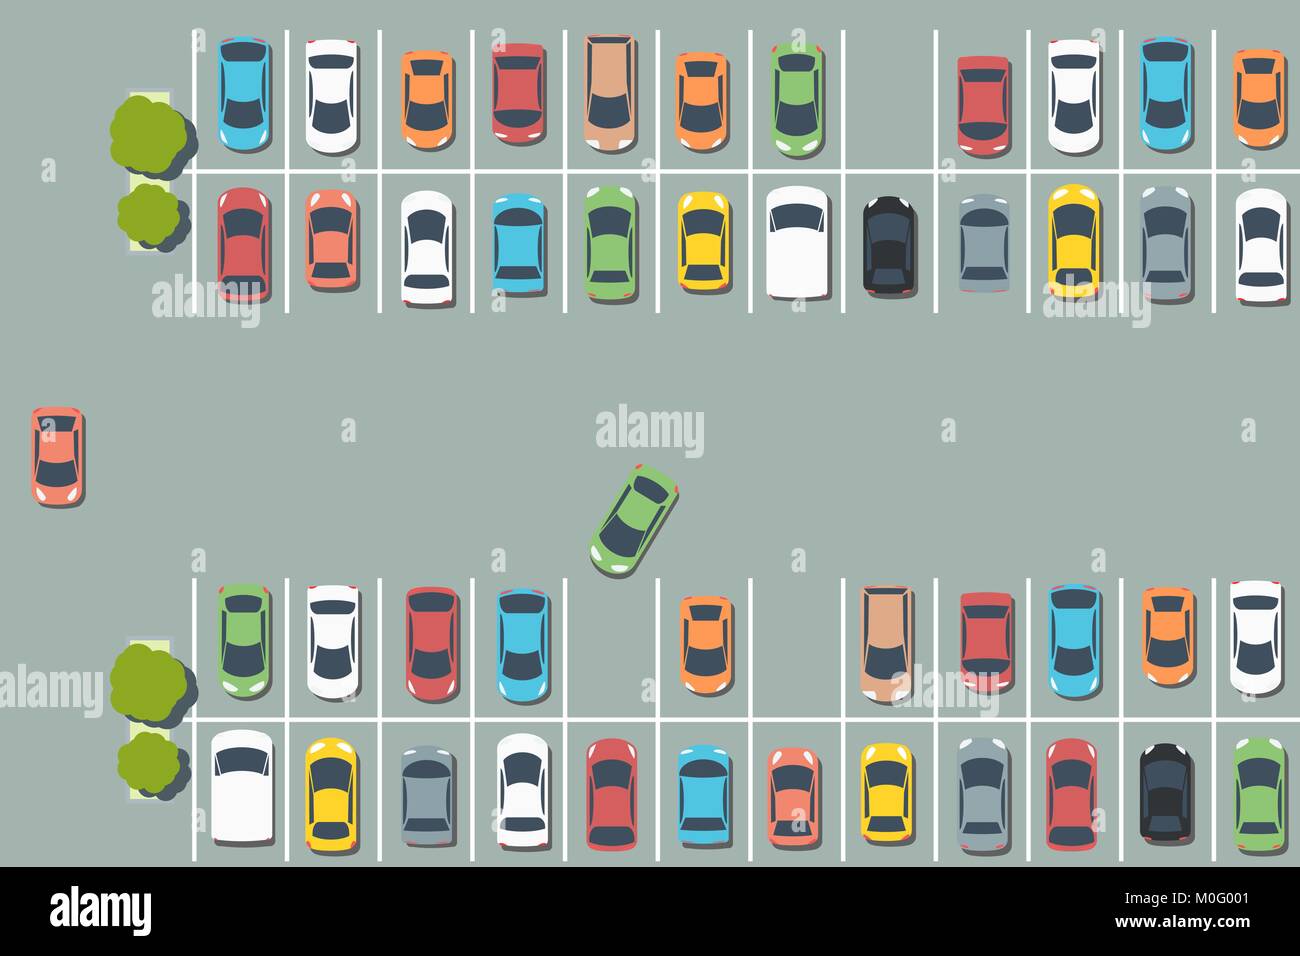 Parking lot illustration - vector car park infrastructure graphics. Stock Vector